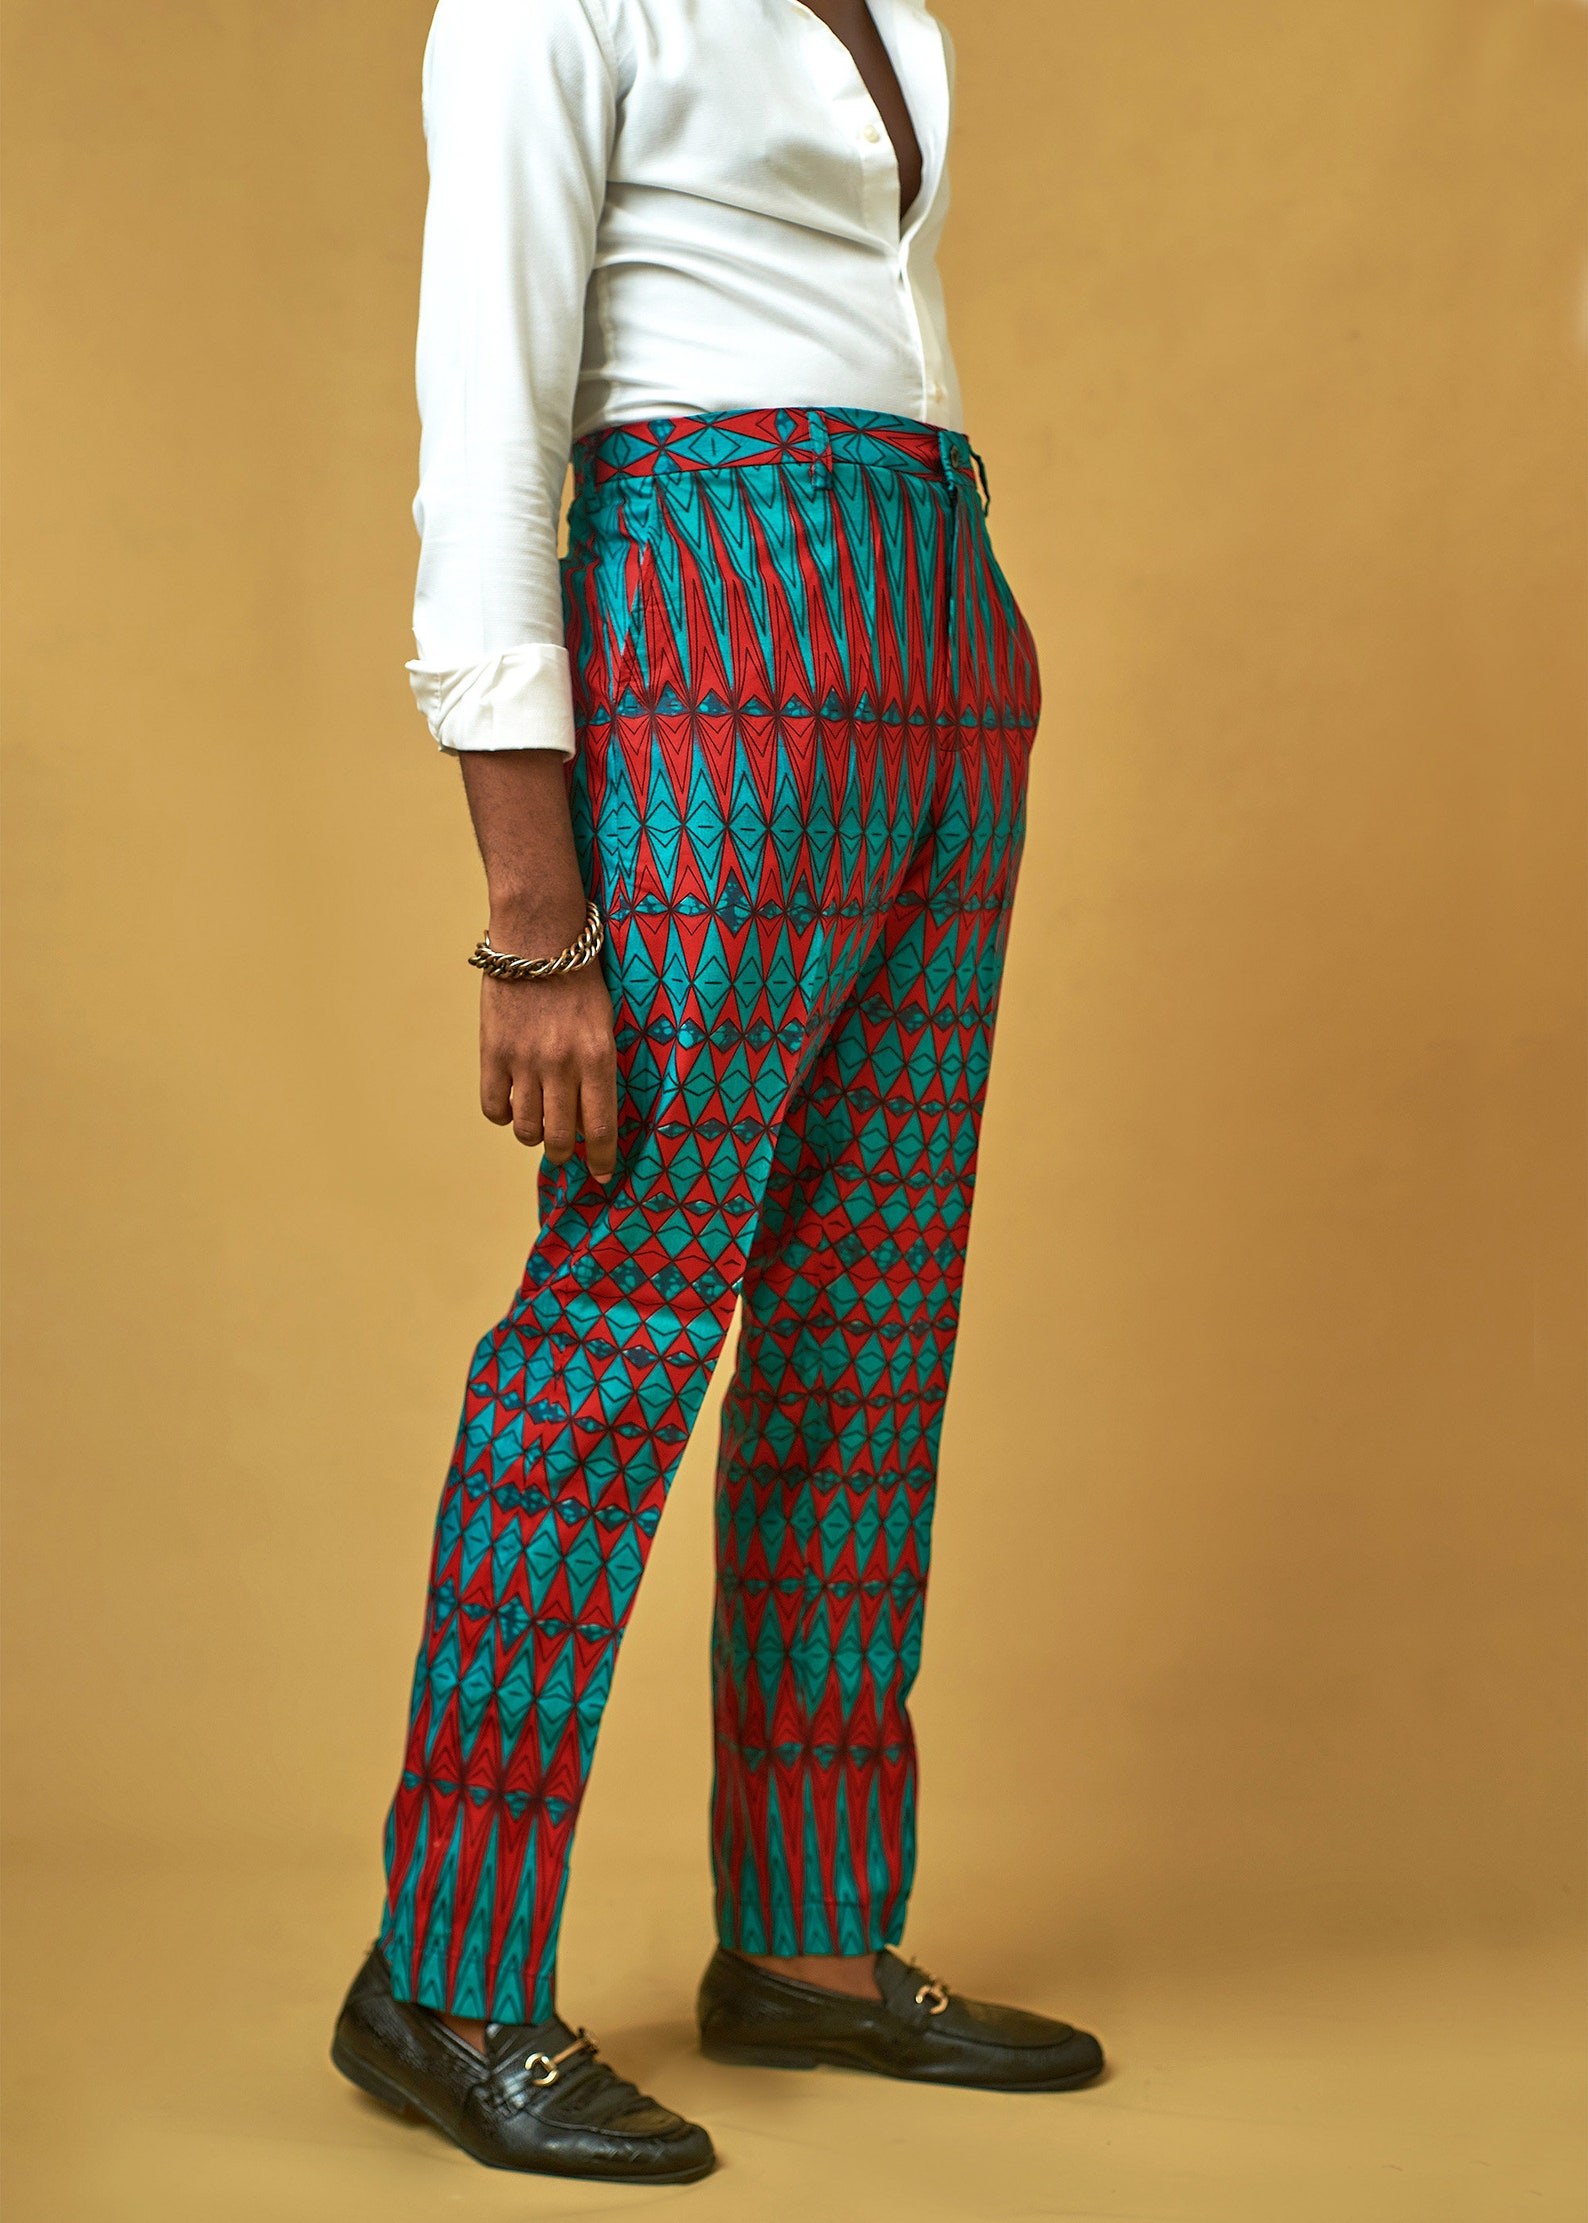 Ankara Men's Pants African Men's Pants Colorful | Etsy